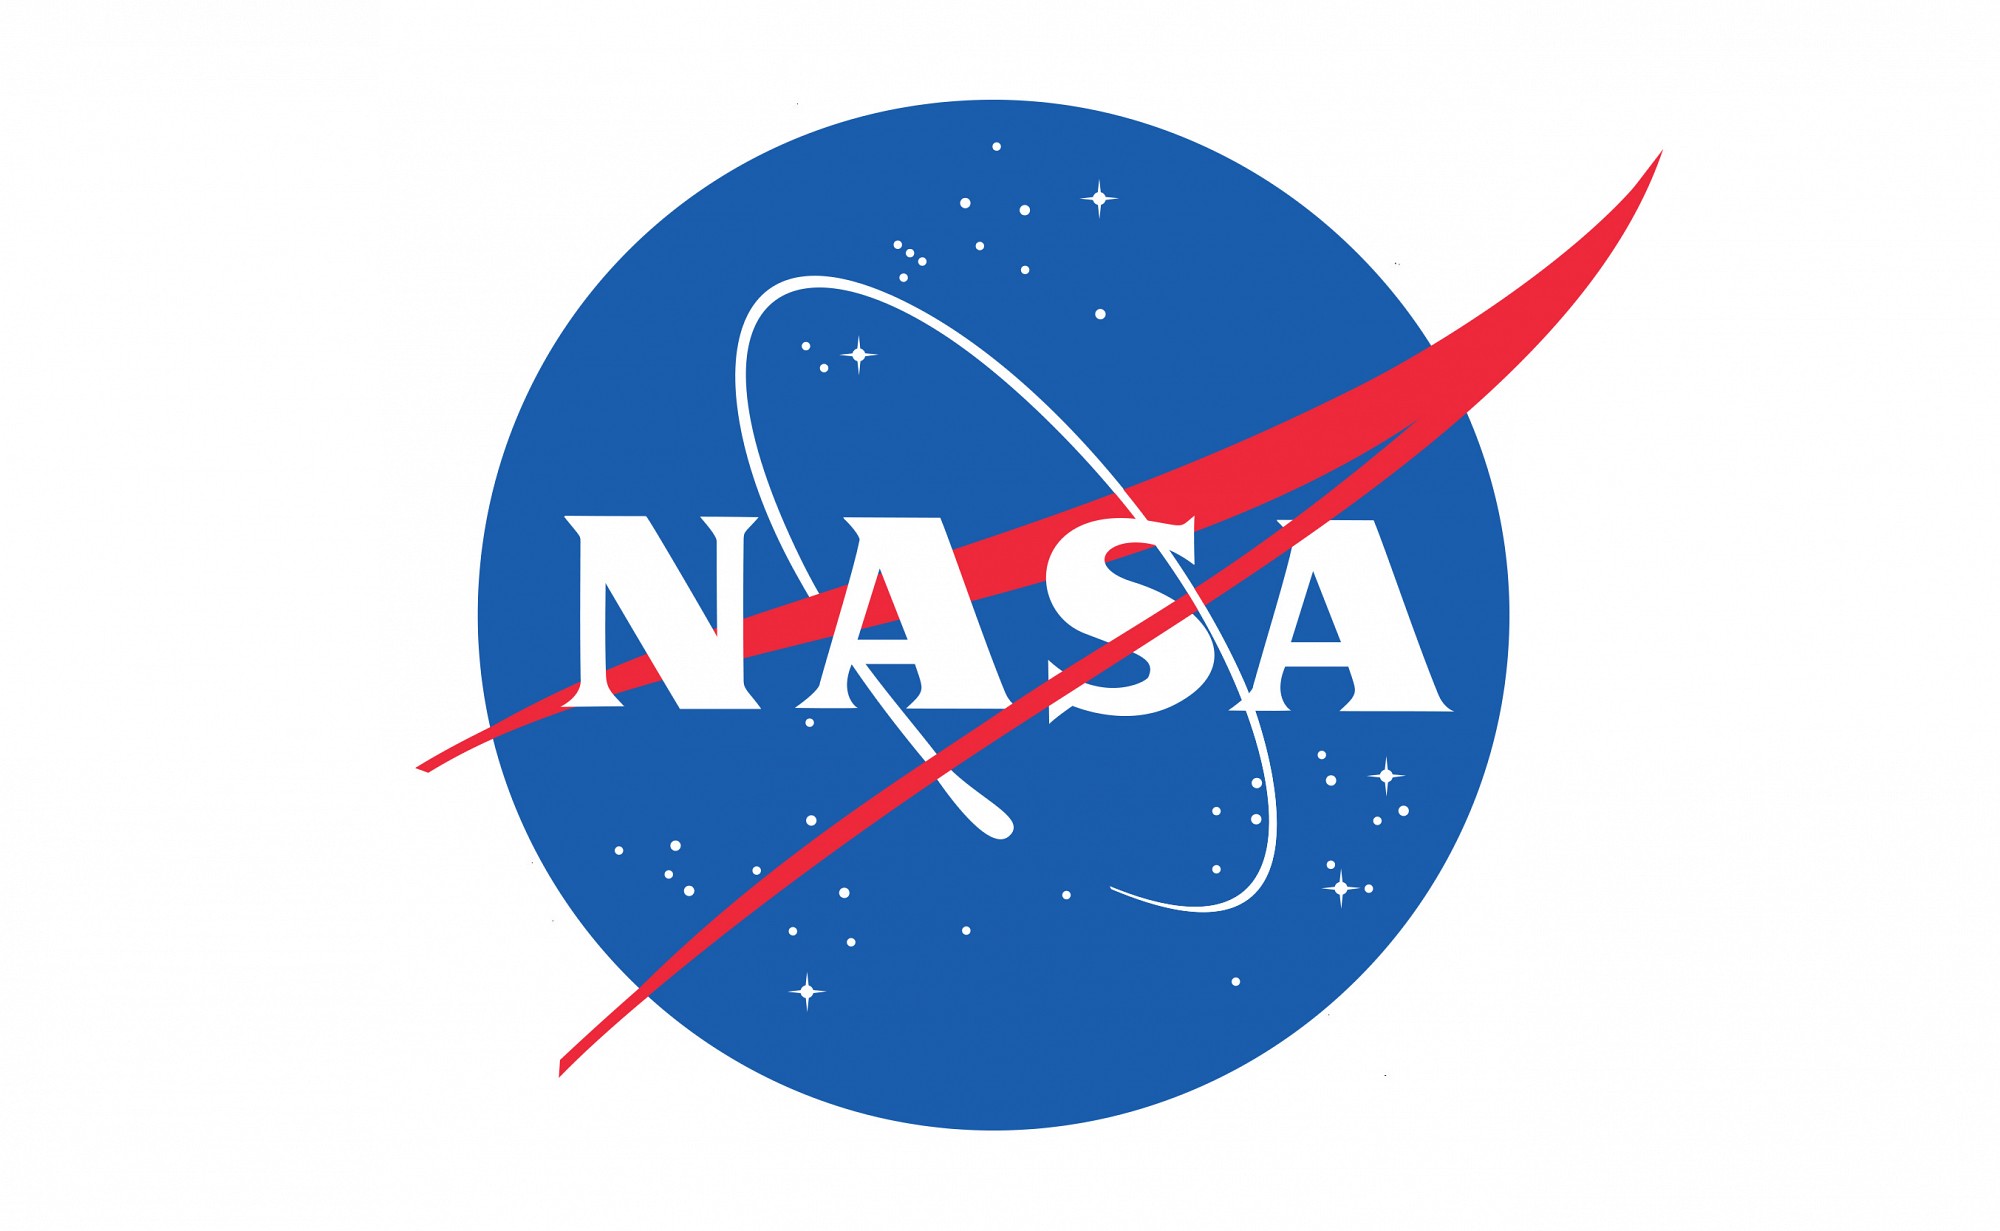 US-NASA-Seal-logo.jpg - 142.50 kB